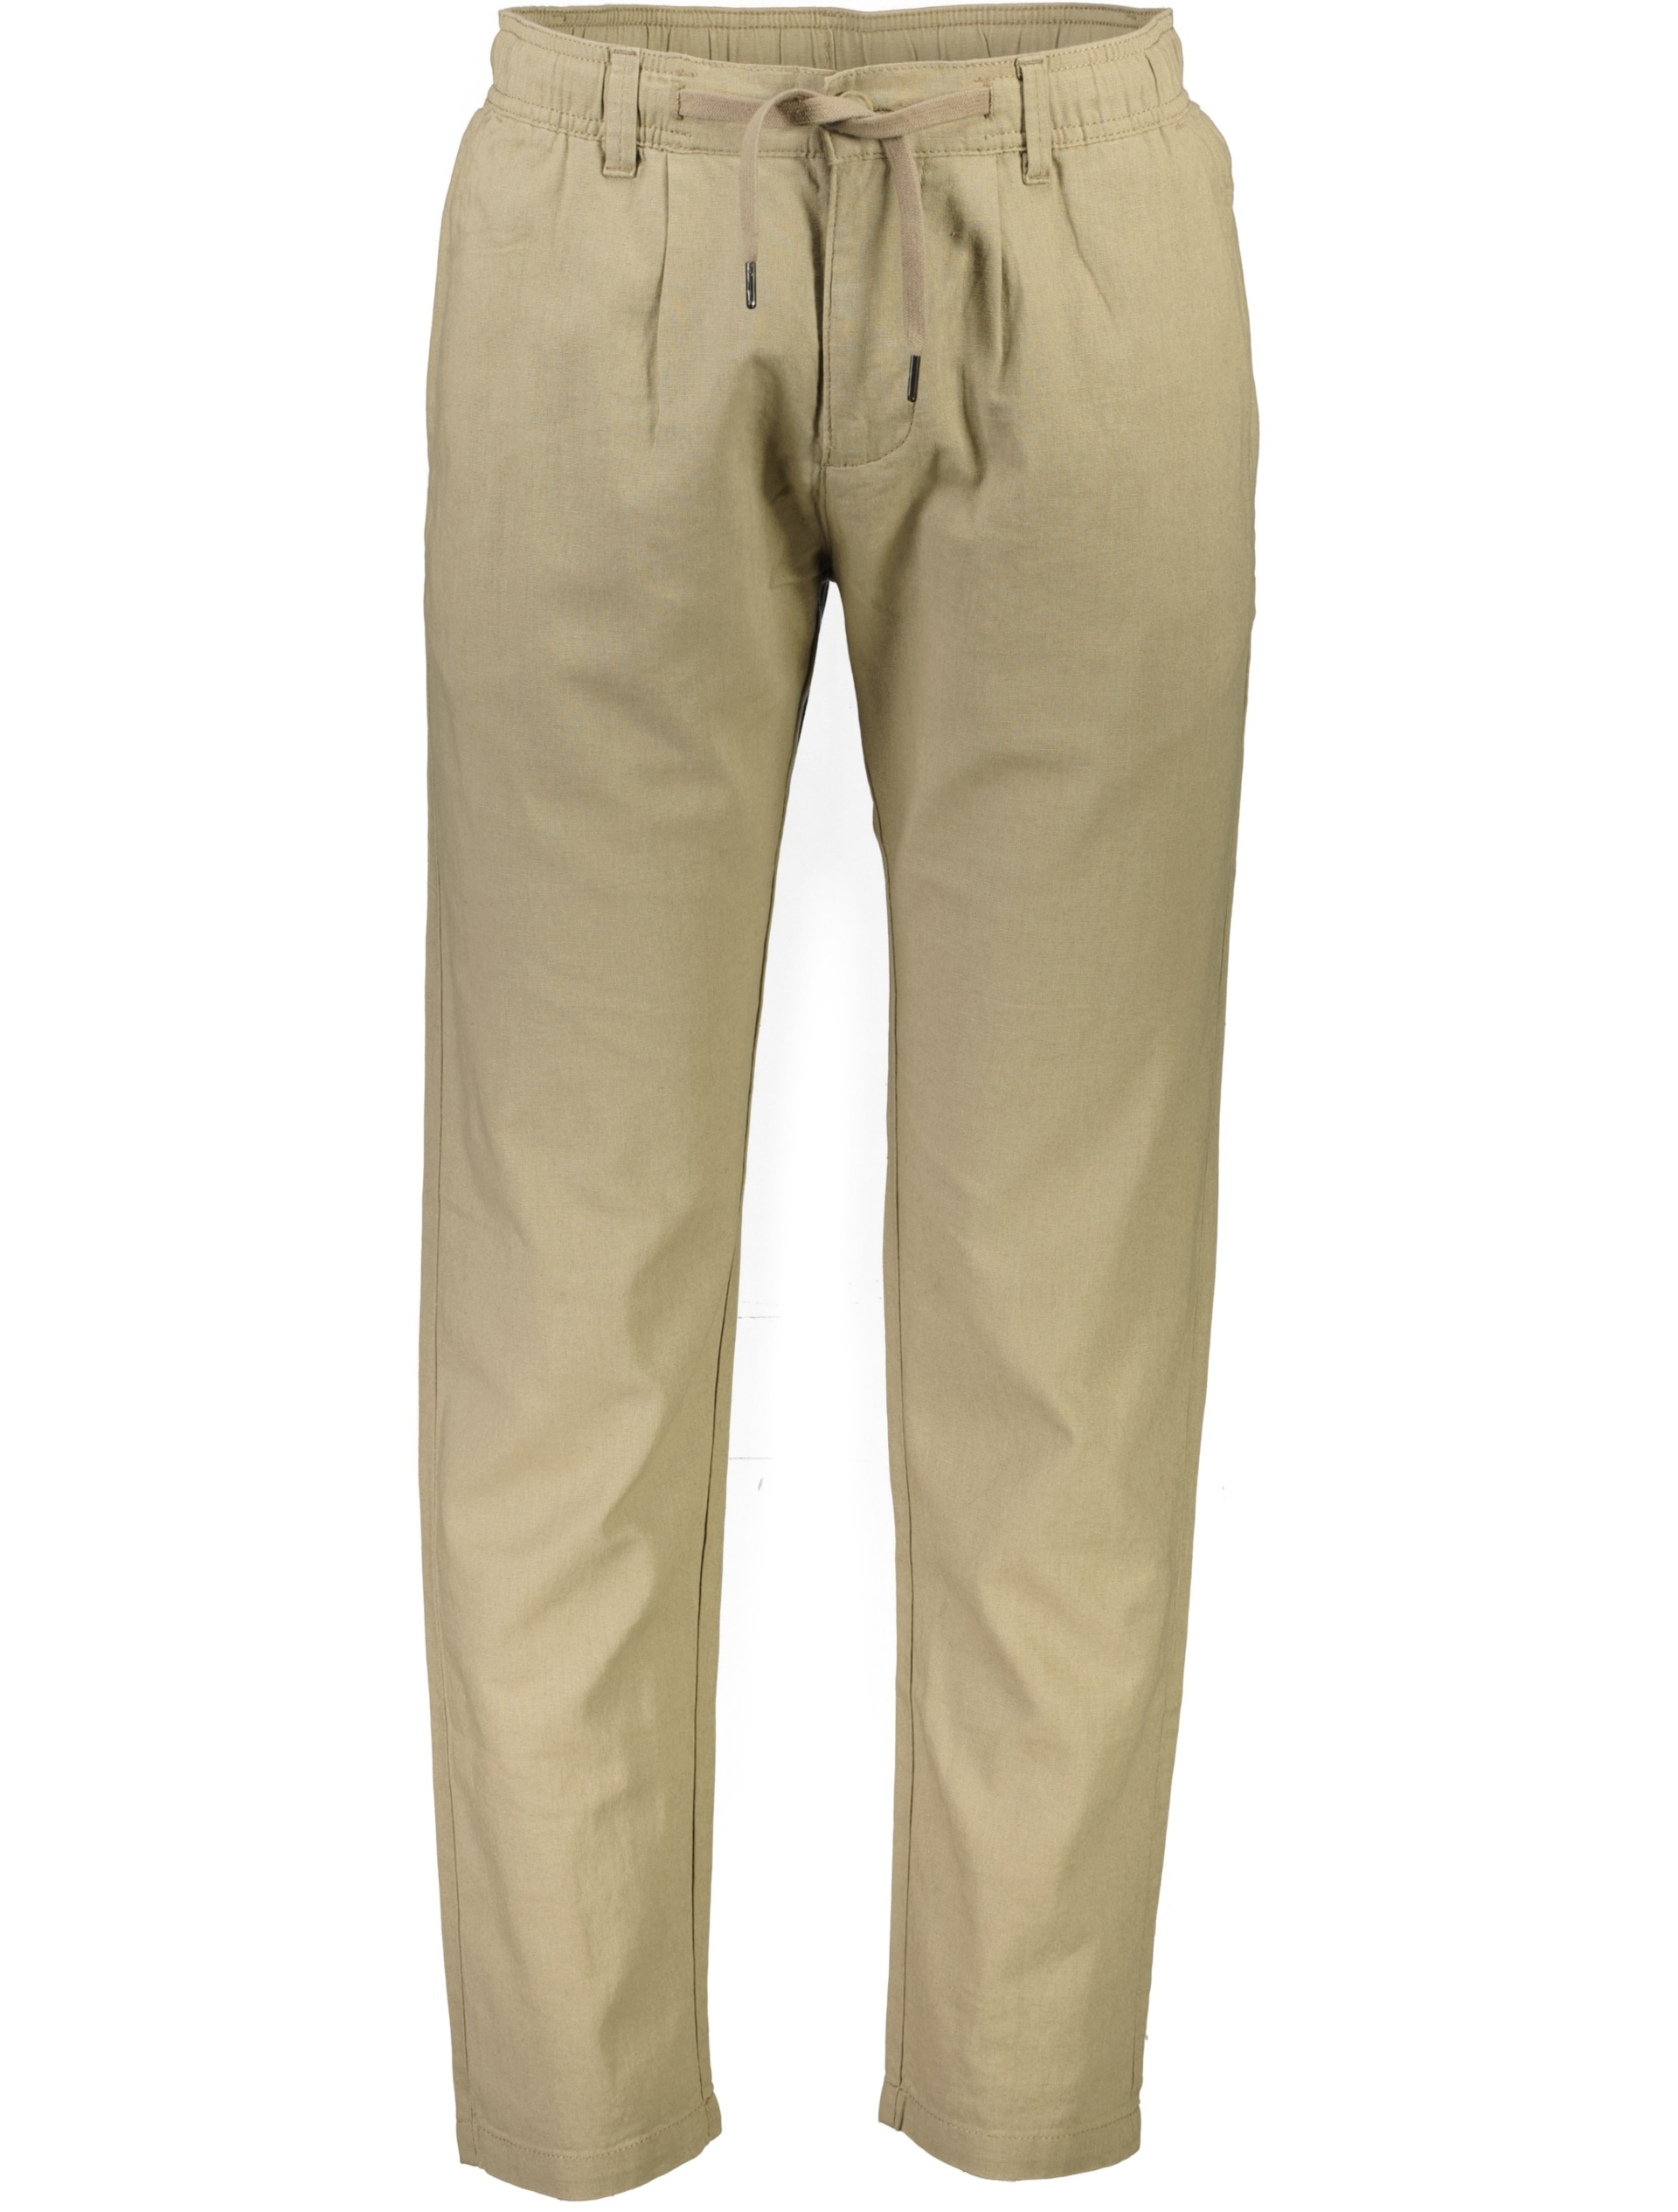 Lindbergh Linen pants brown / mid stone